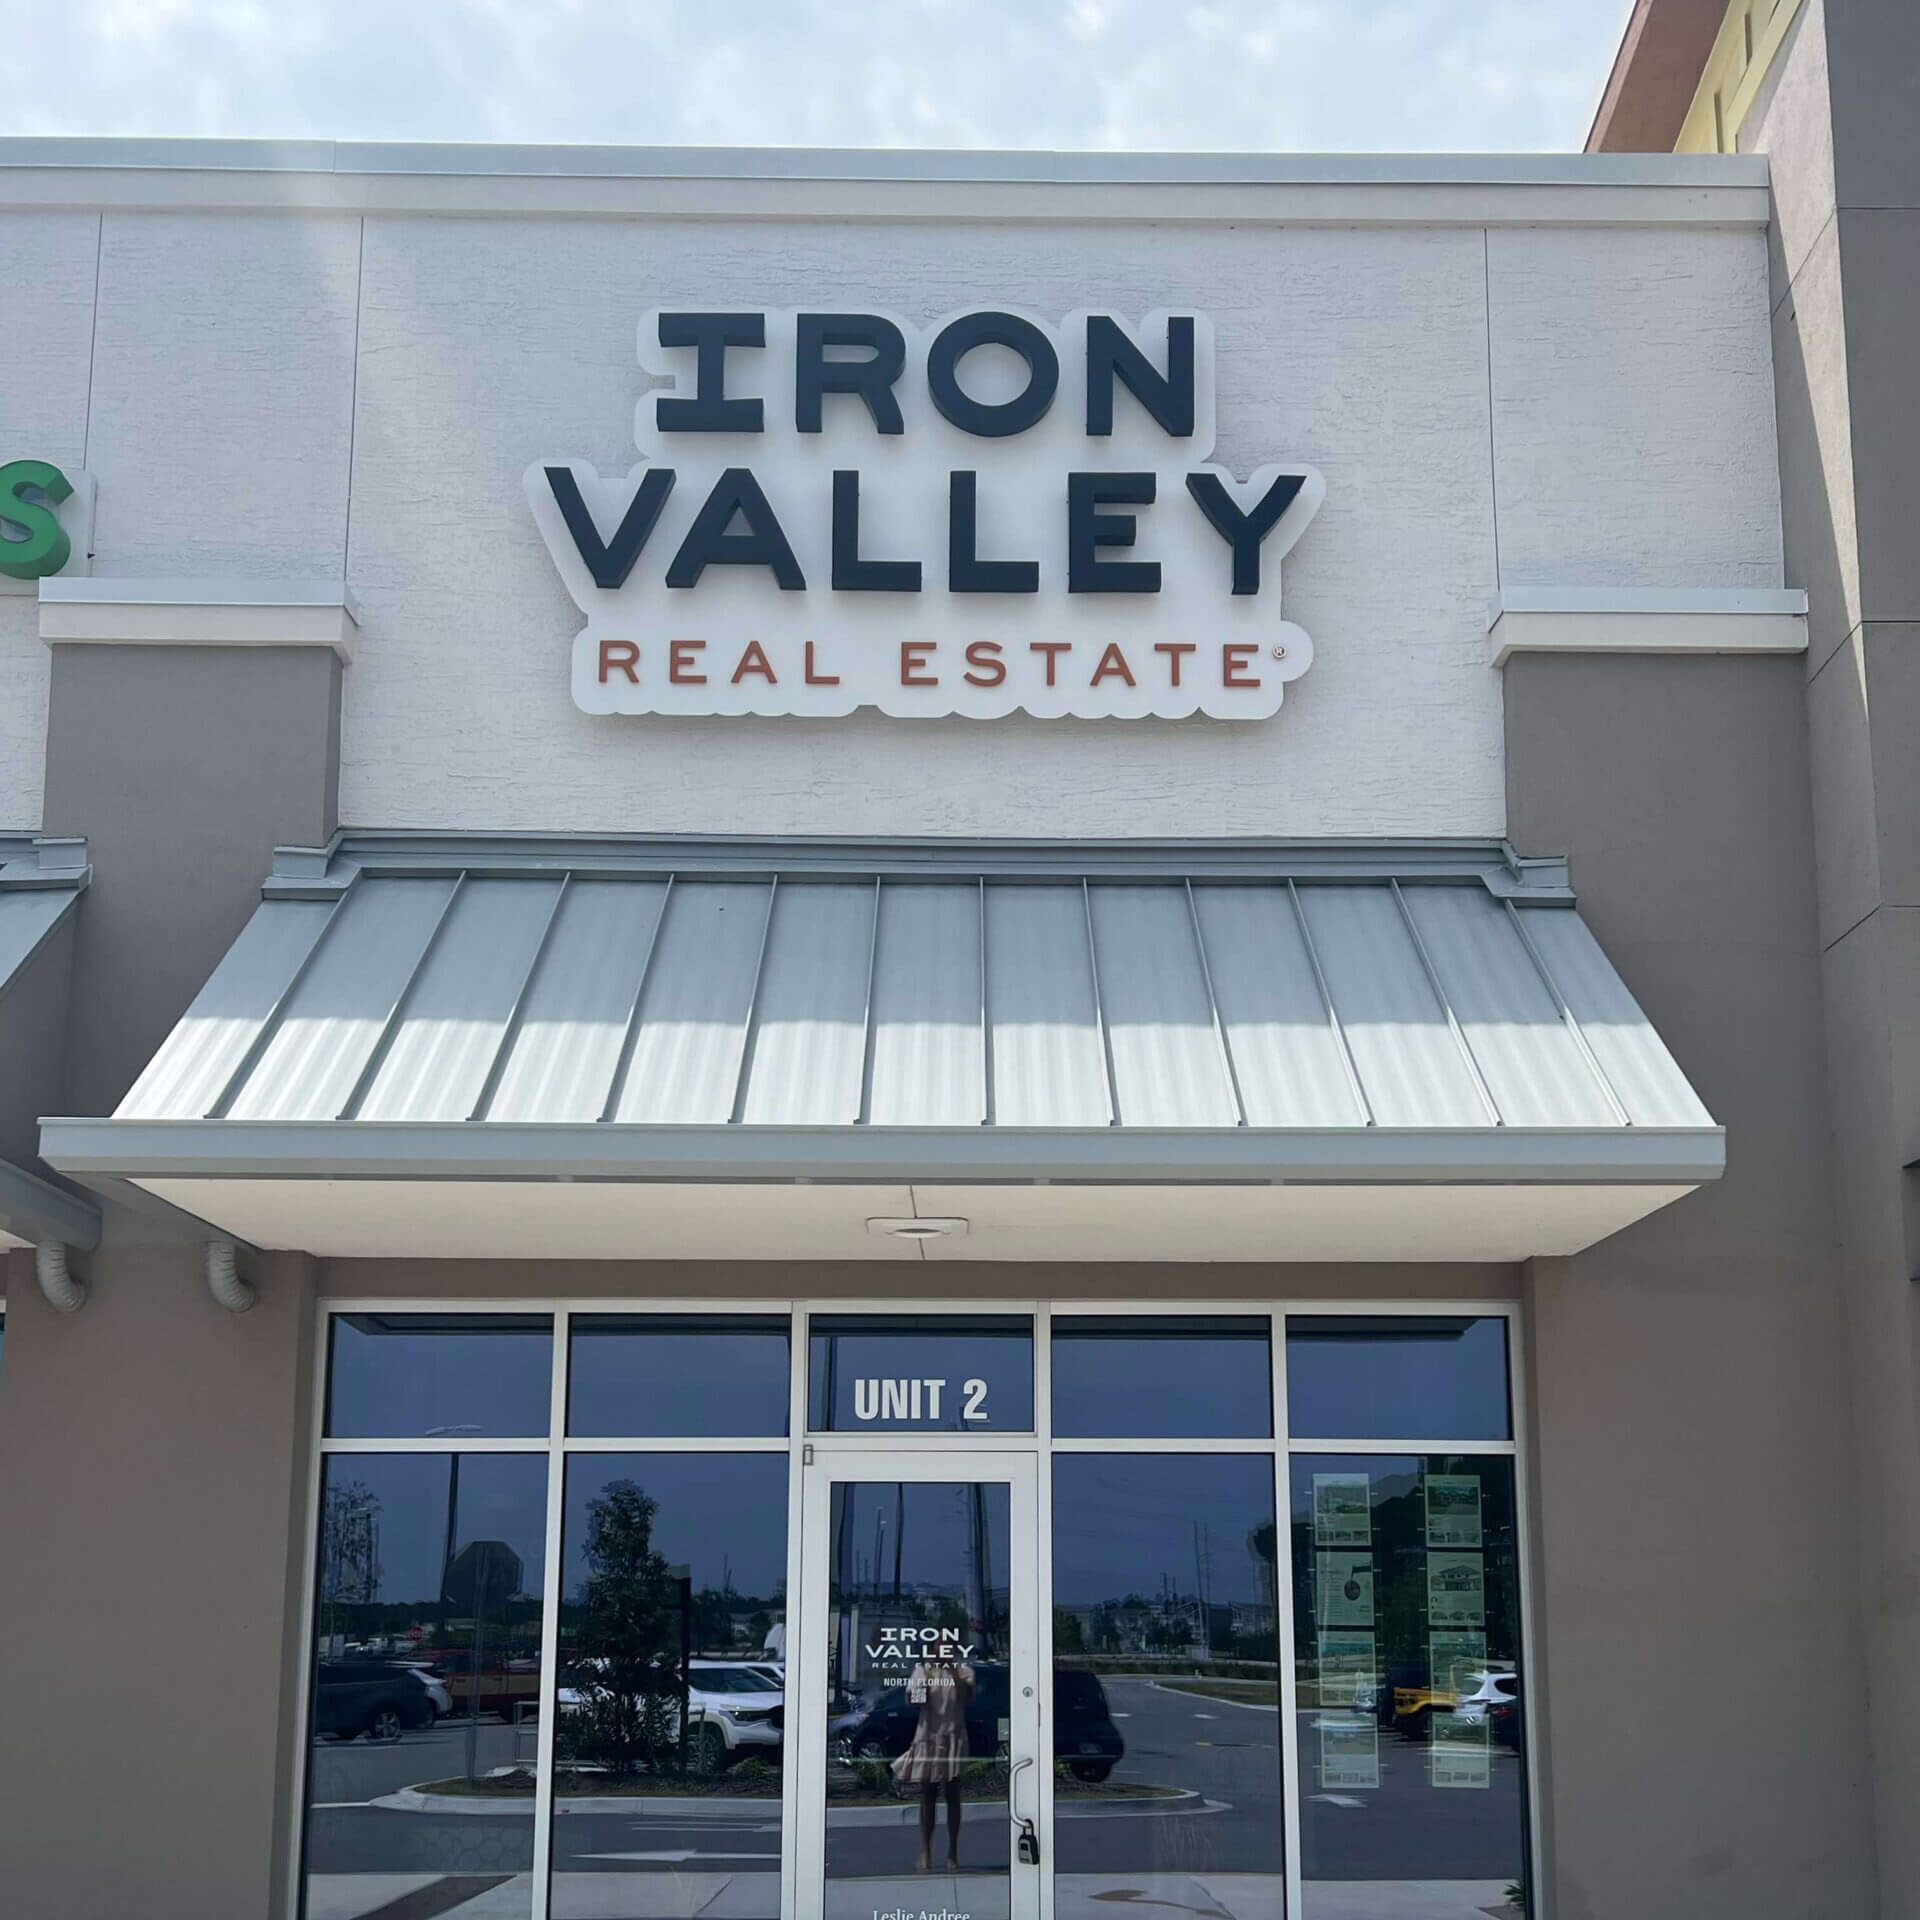 Iron valley real estate.